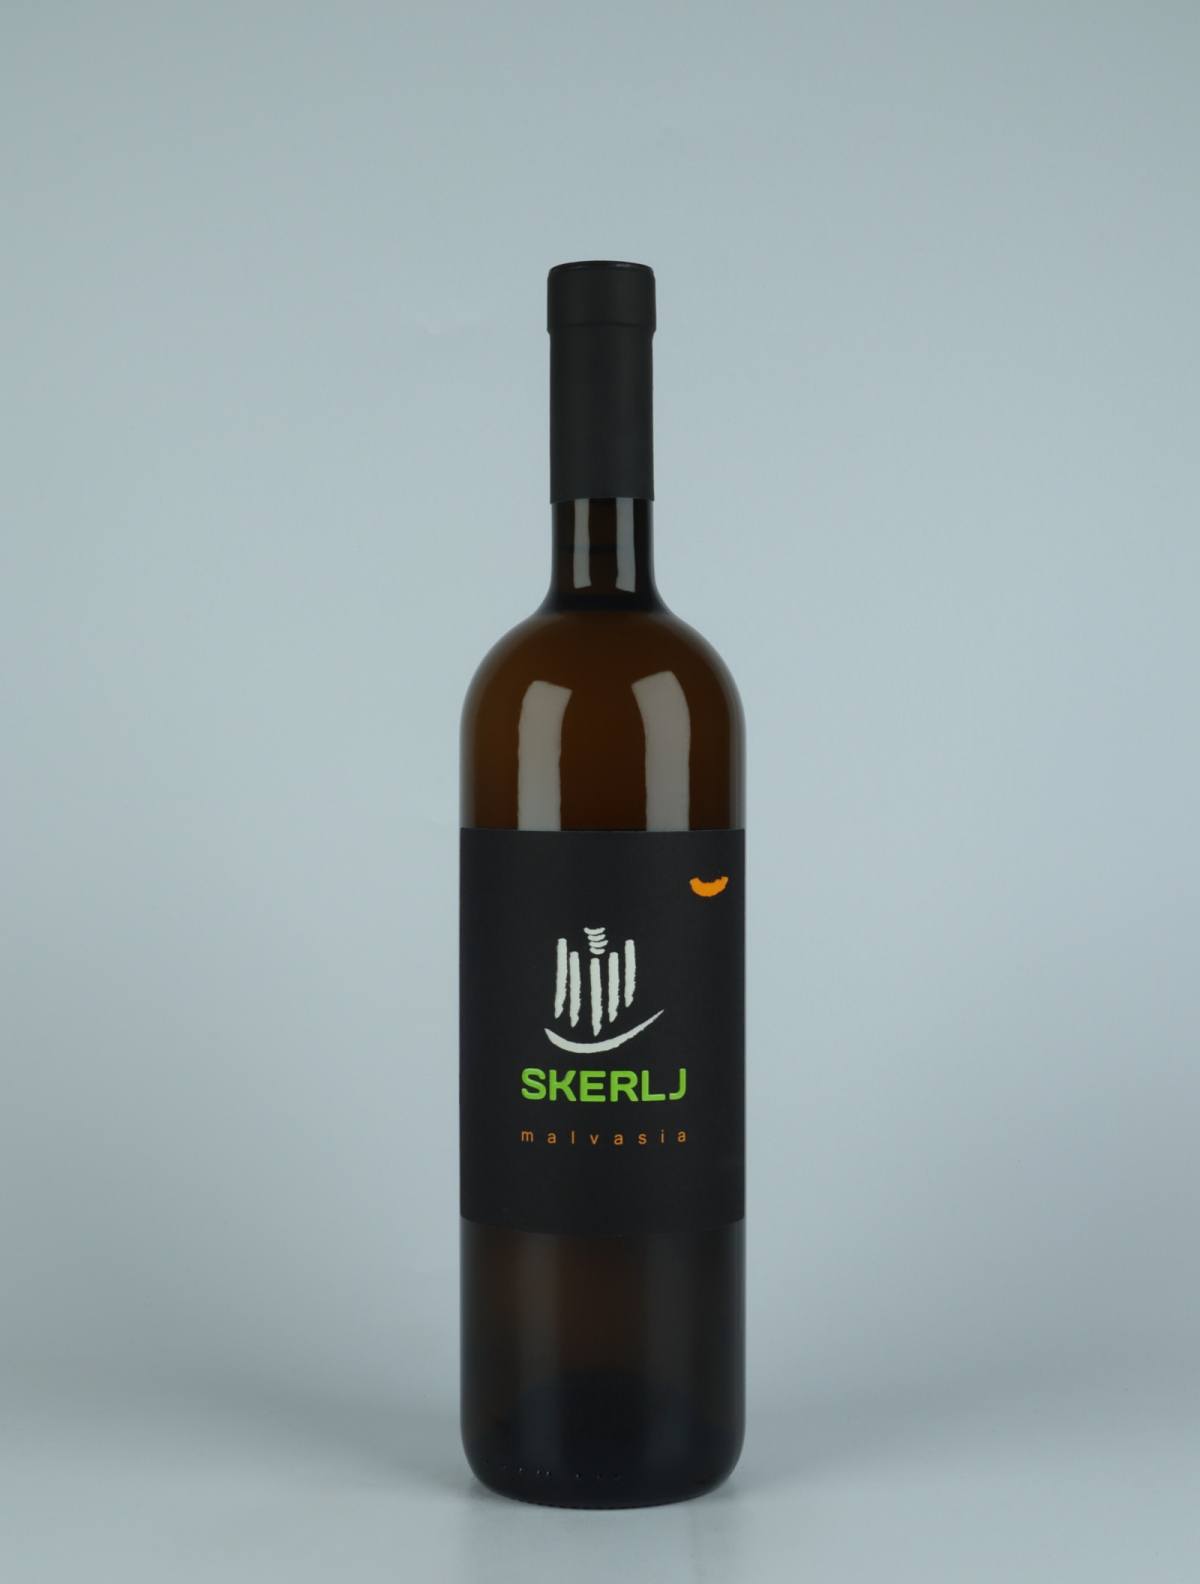 En flaske 2020 Malvasia Orange vin fra Skerlj, Friuli i Italien